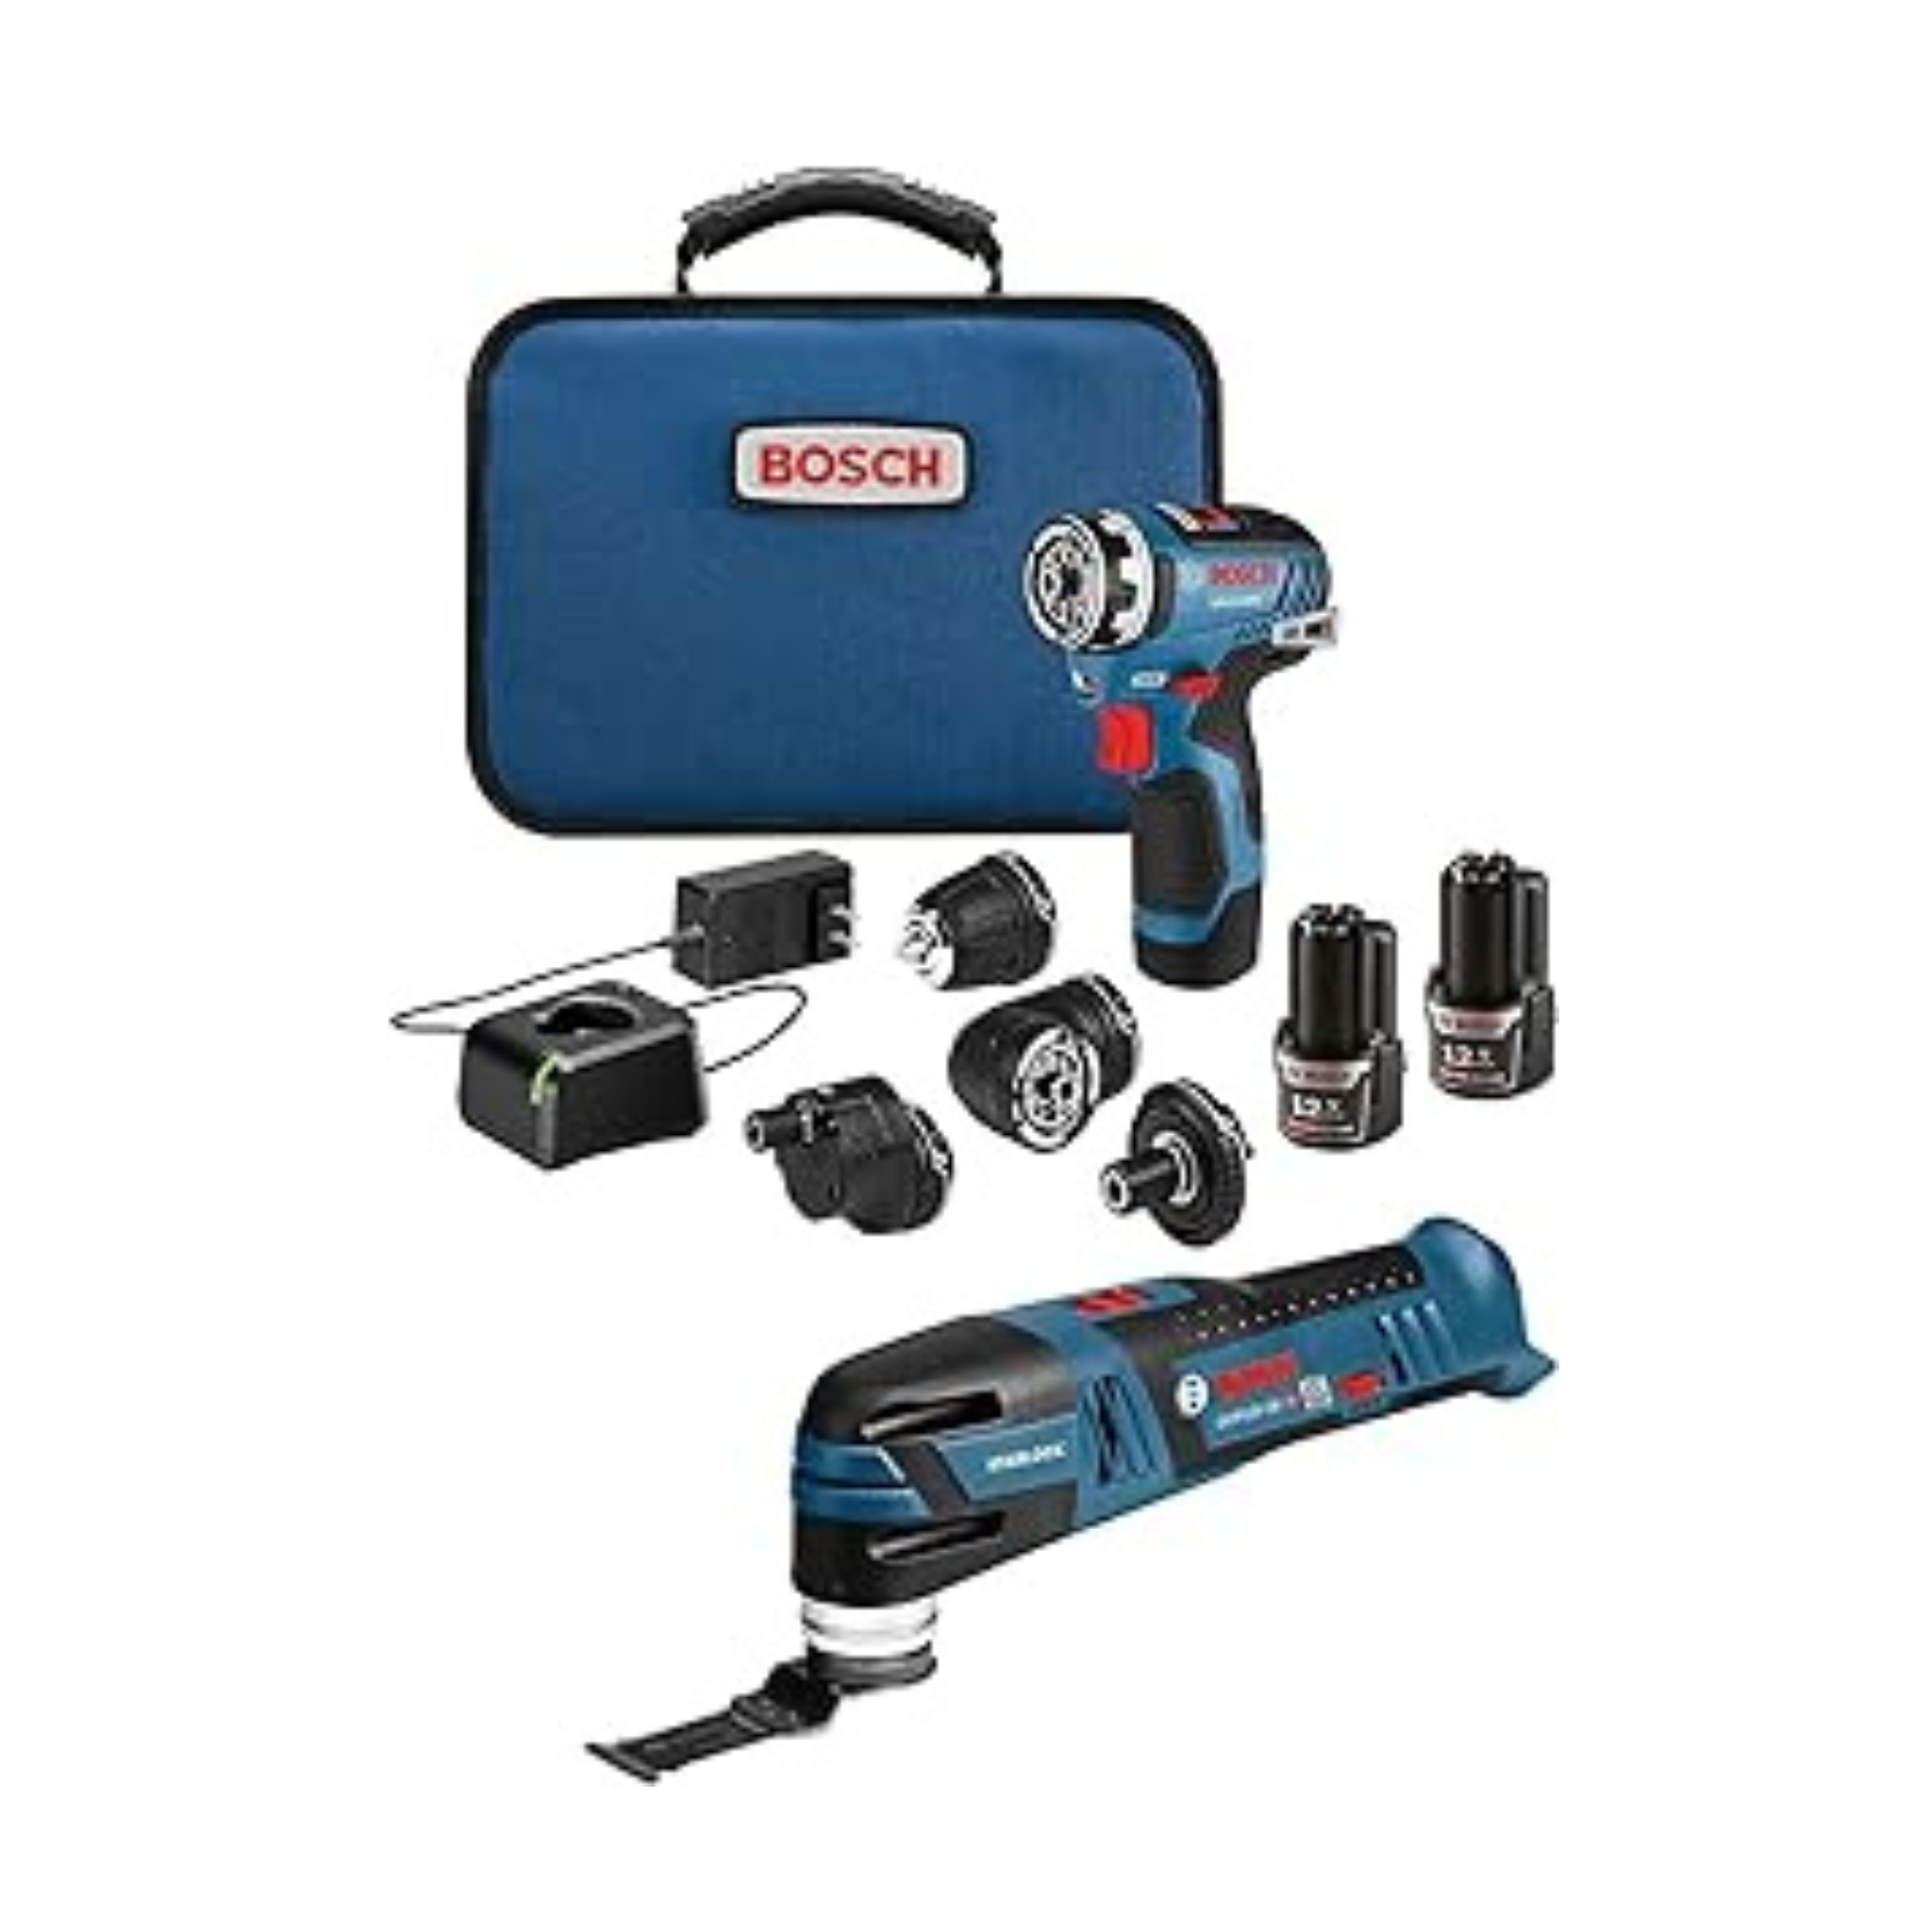 Bosch 12V Max 2-Tool Combo Kit w/ Chameleon Drill/Driver & Oscillating Multi-Tool